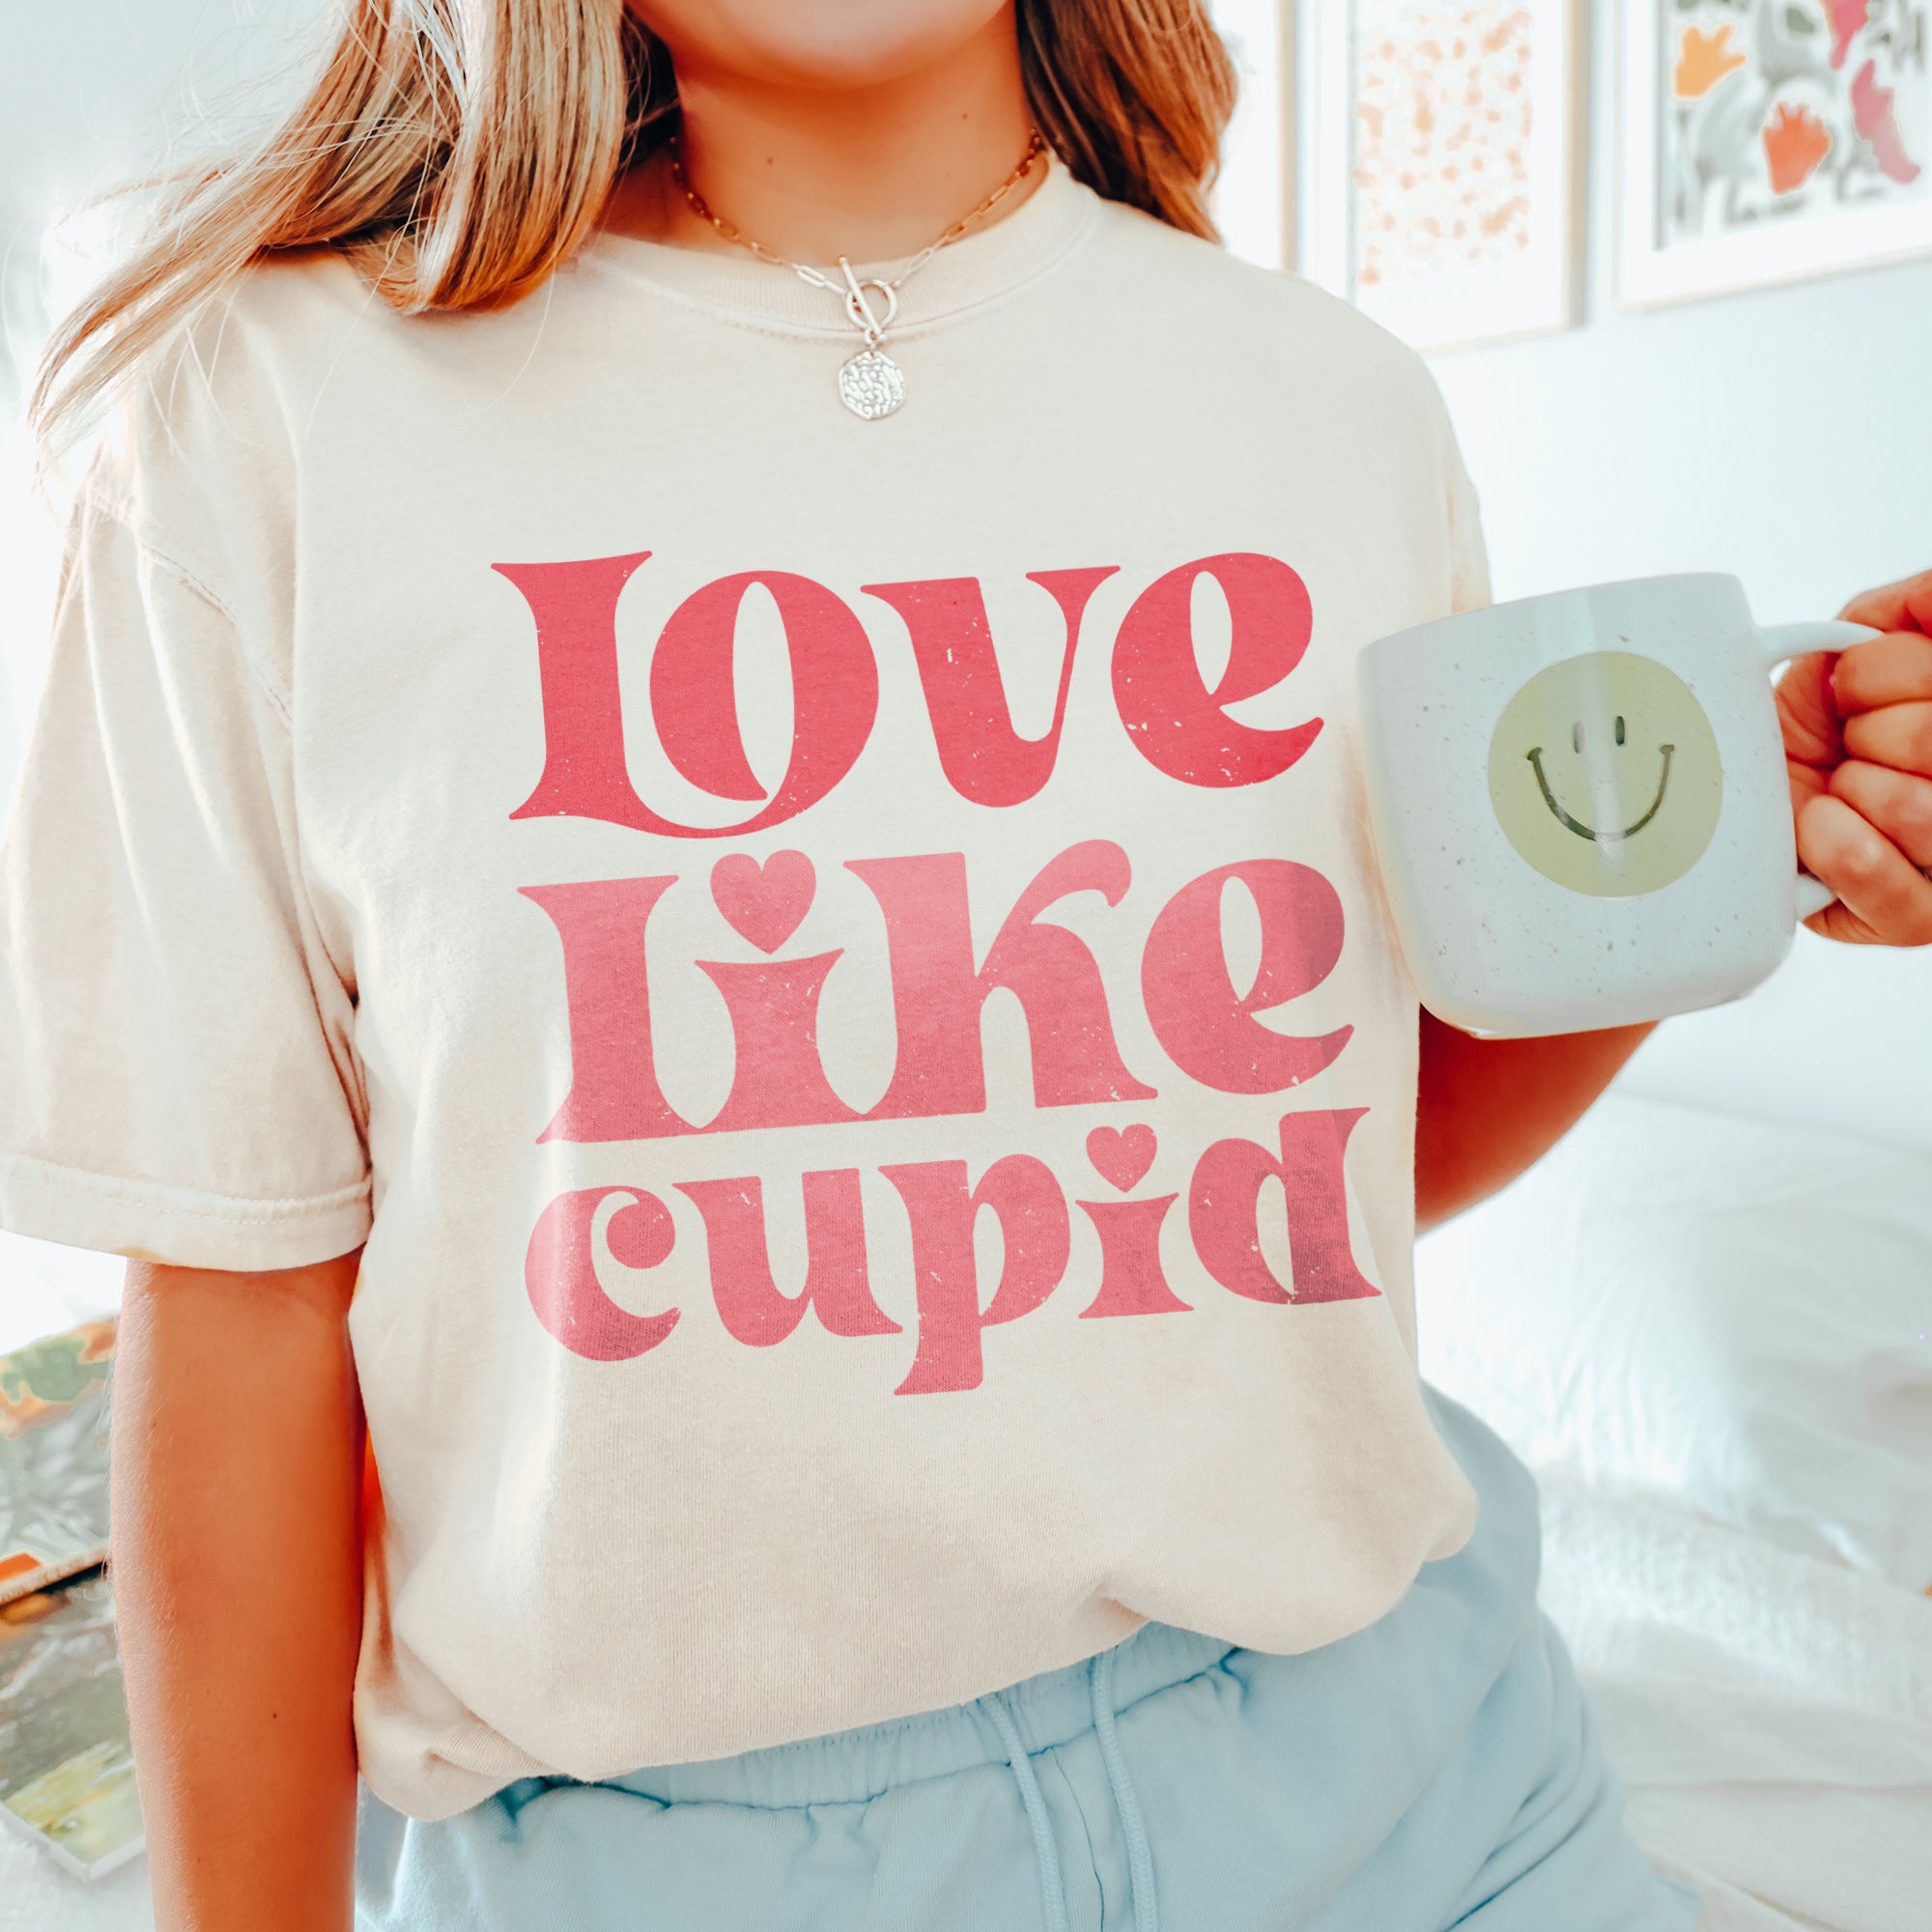 Love Like Cupid Valentines Shirt Garment-Dyed Tee